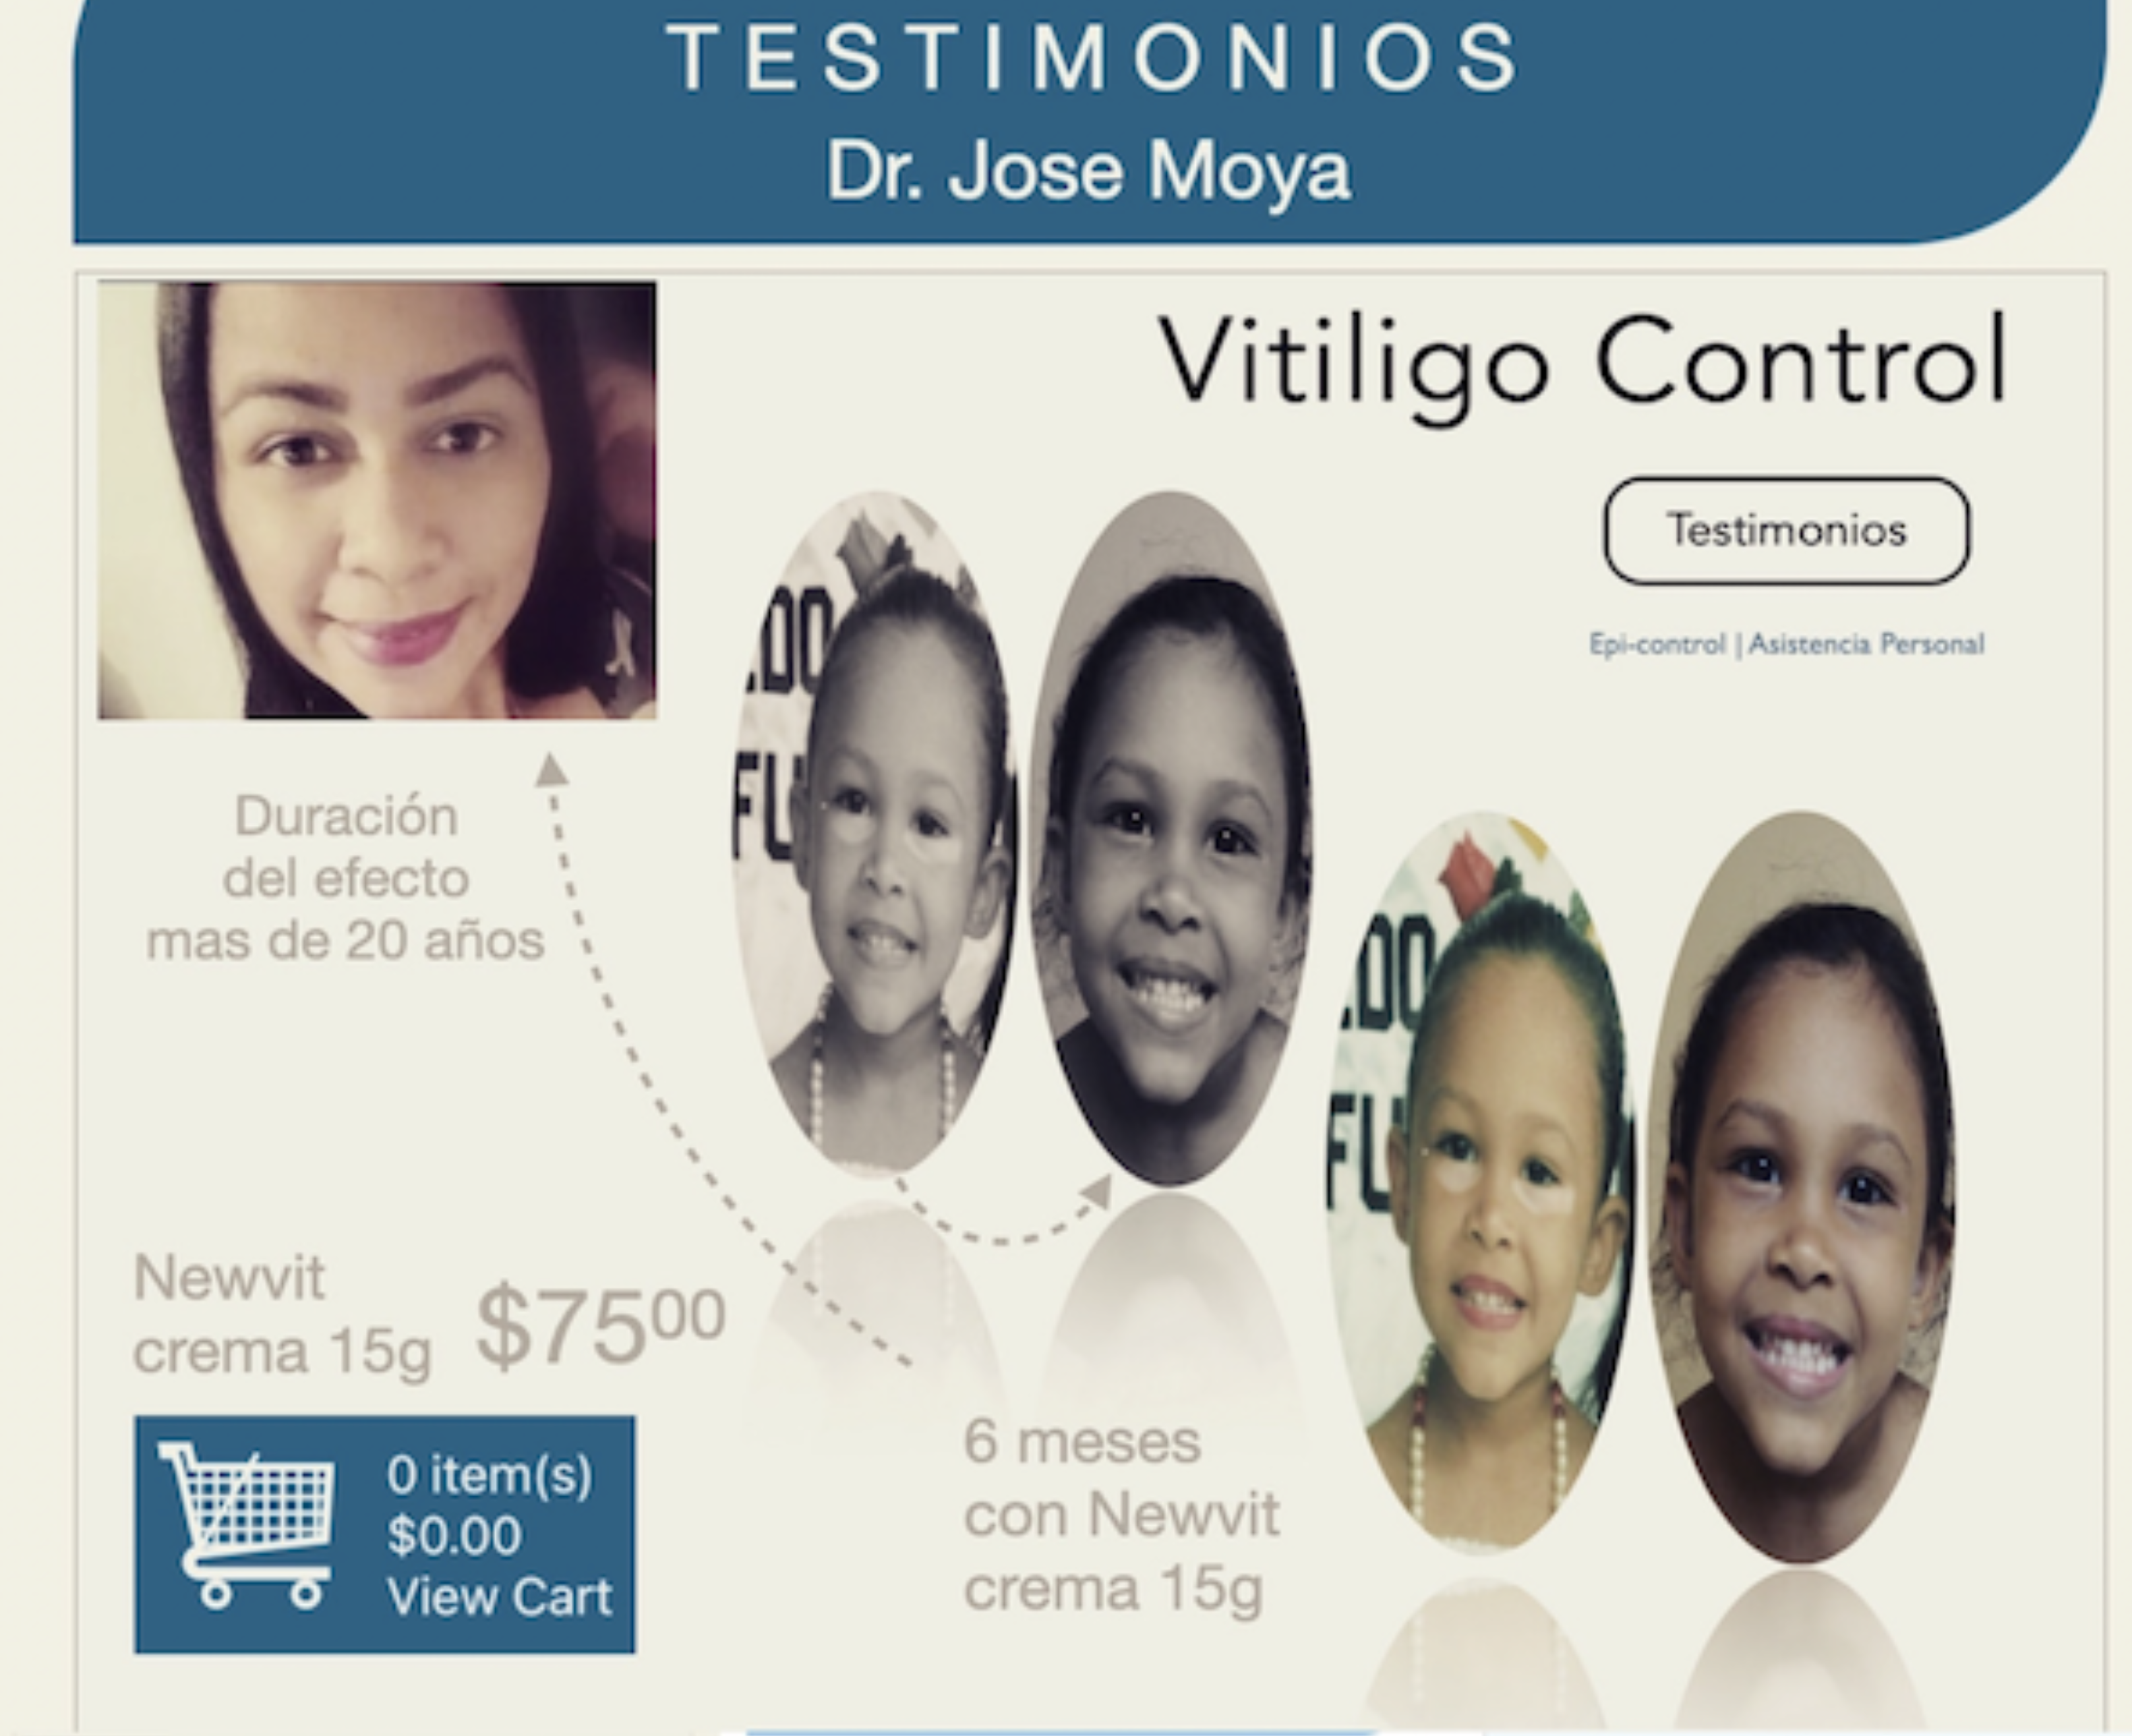 testimonios_libro_evitando_y_controlando_vitiligo_8.png